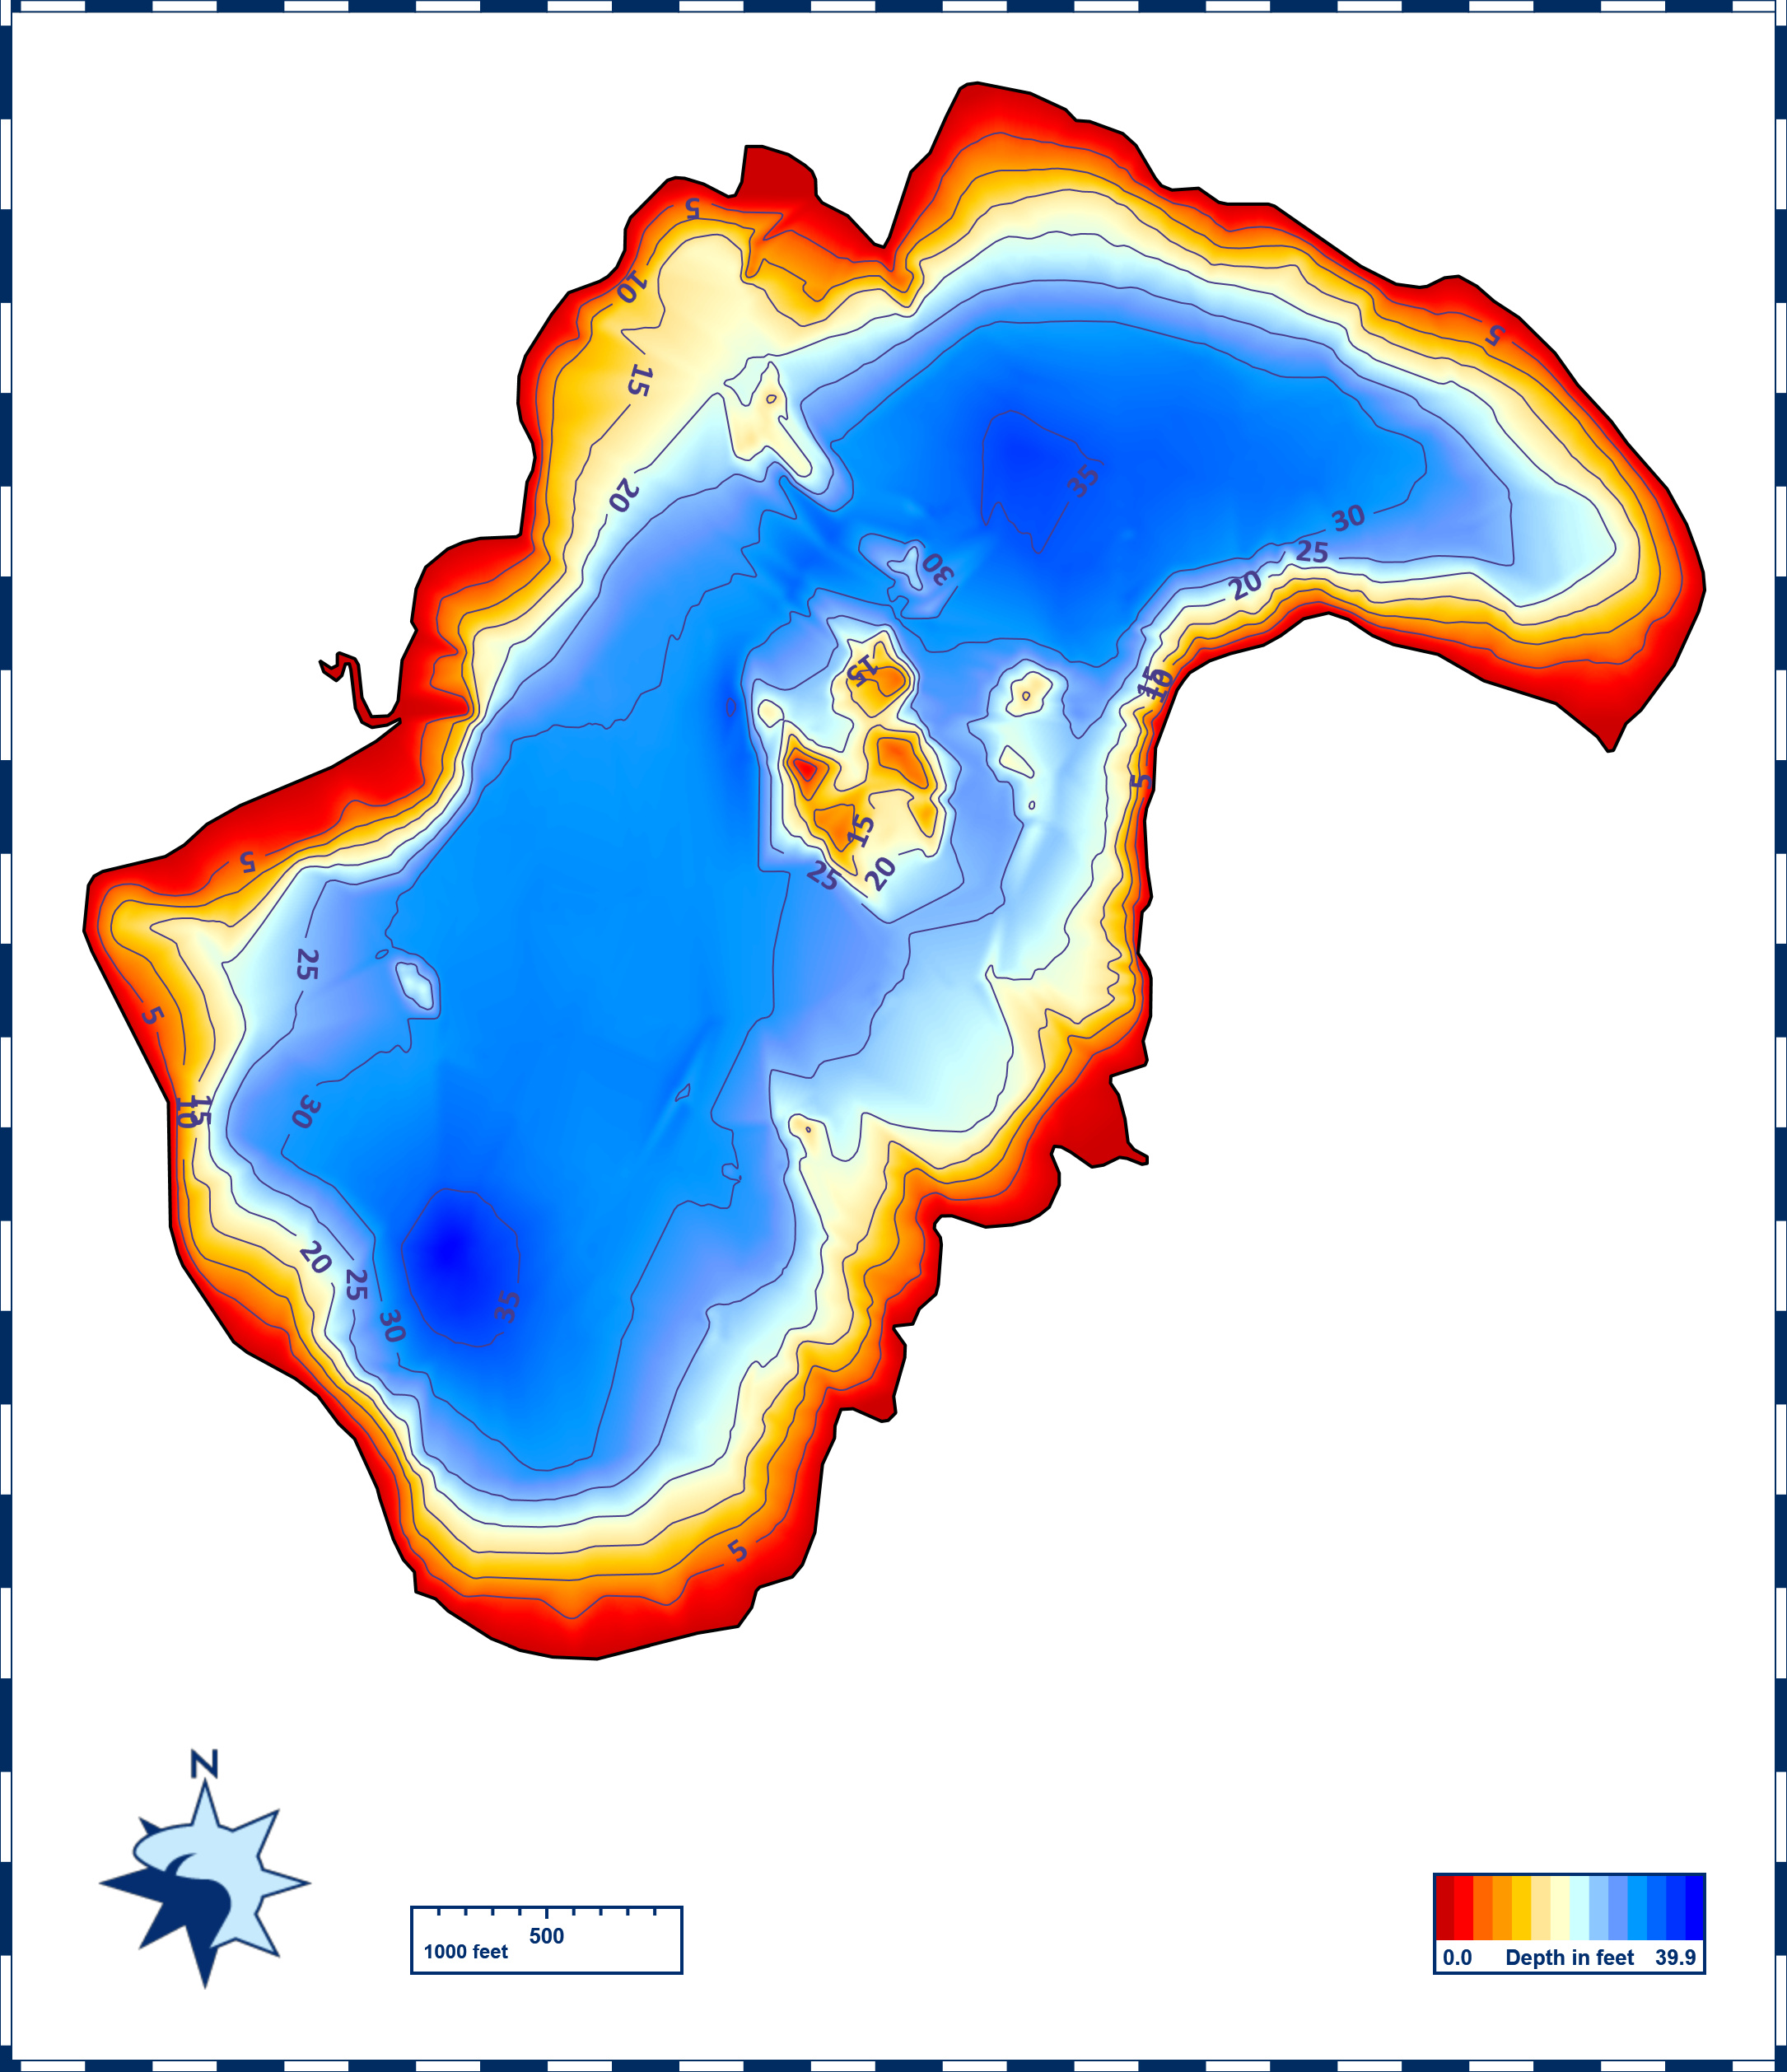 Ossipee Lake Depth Chart